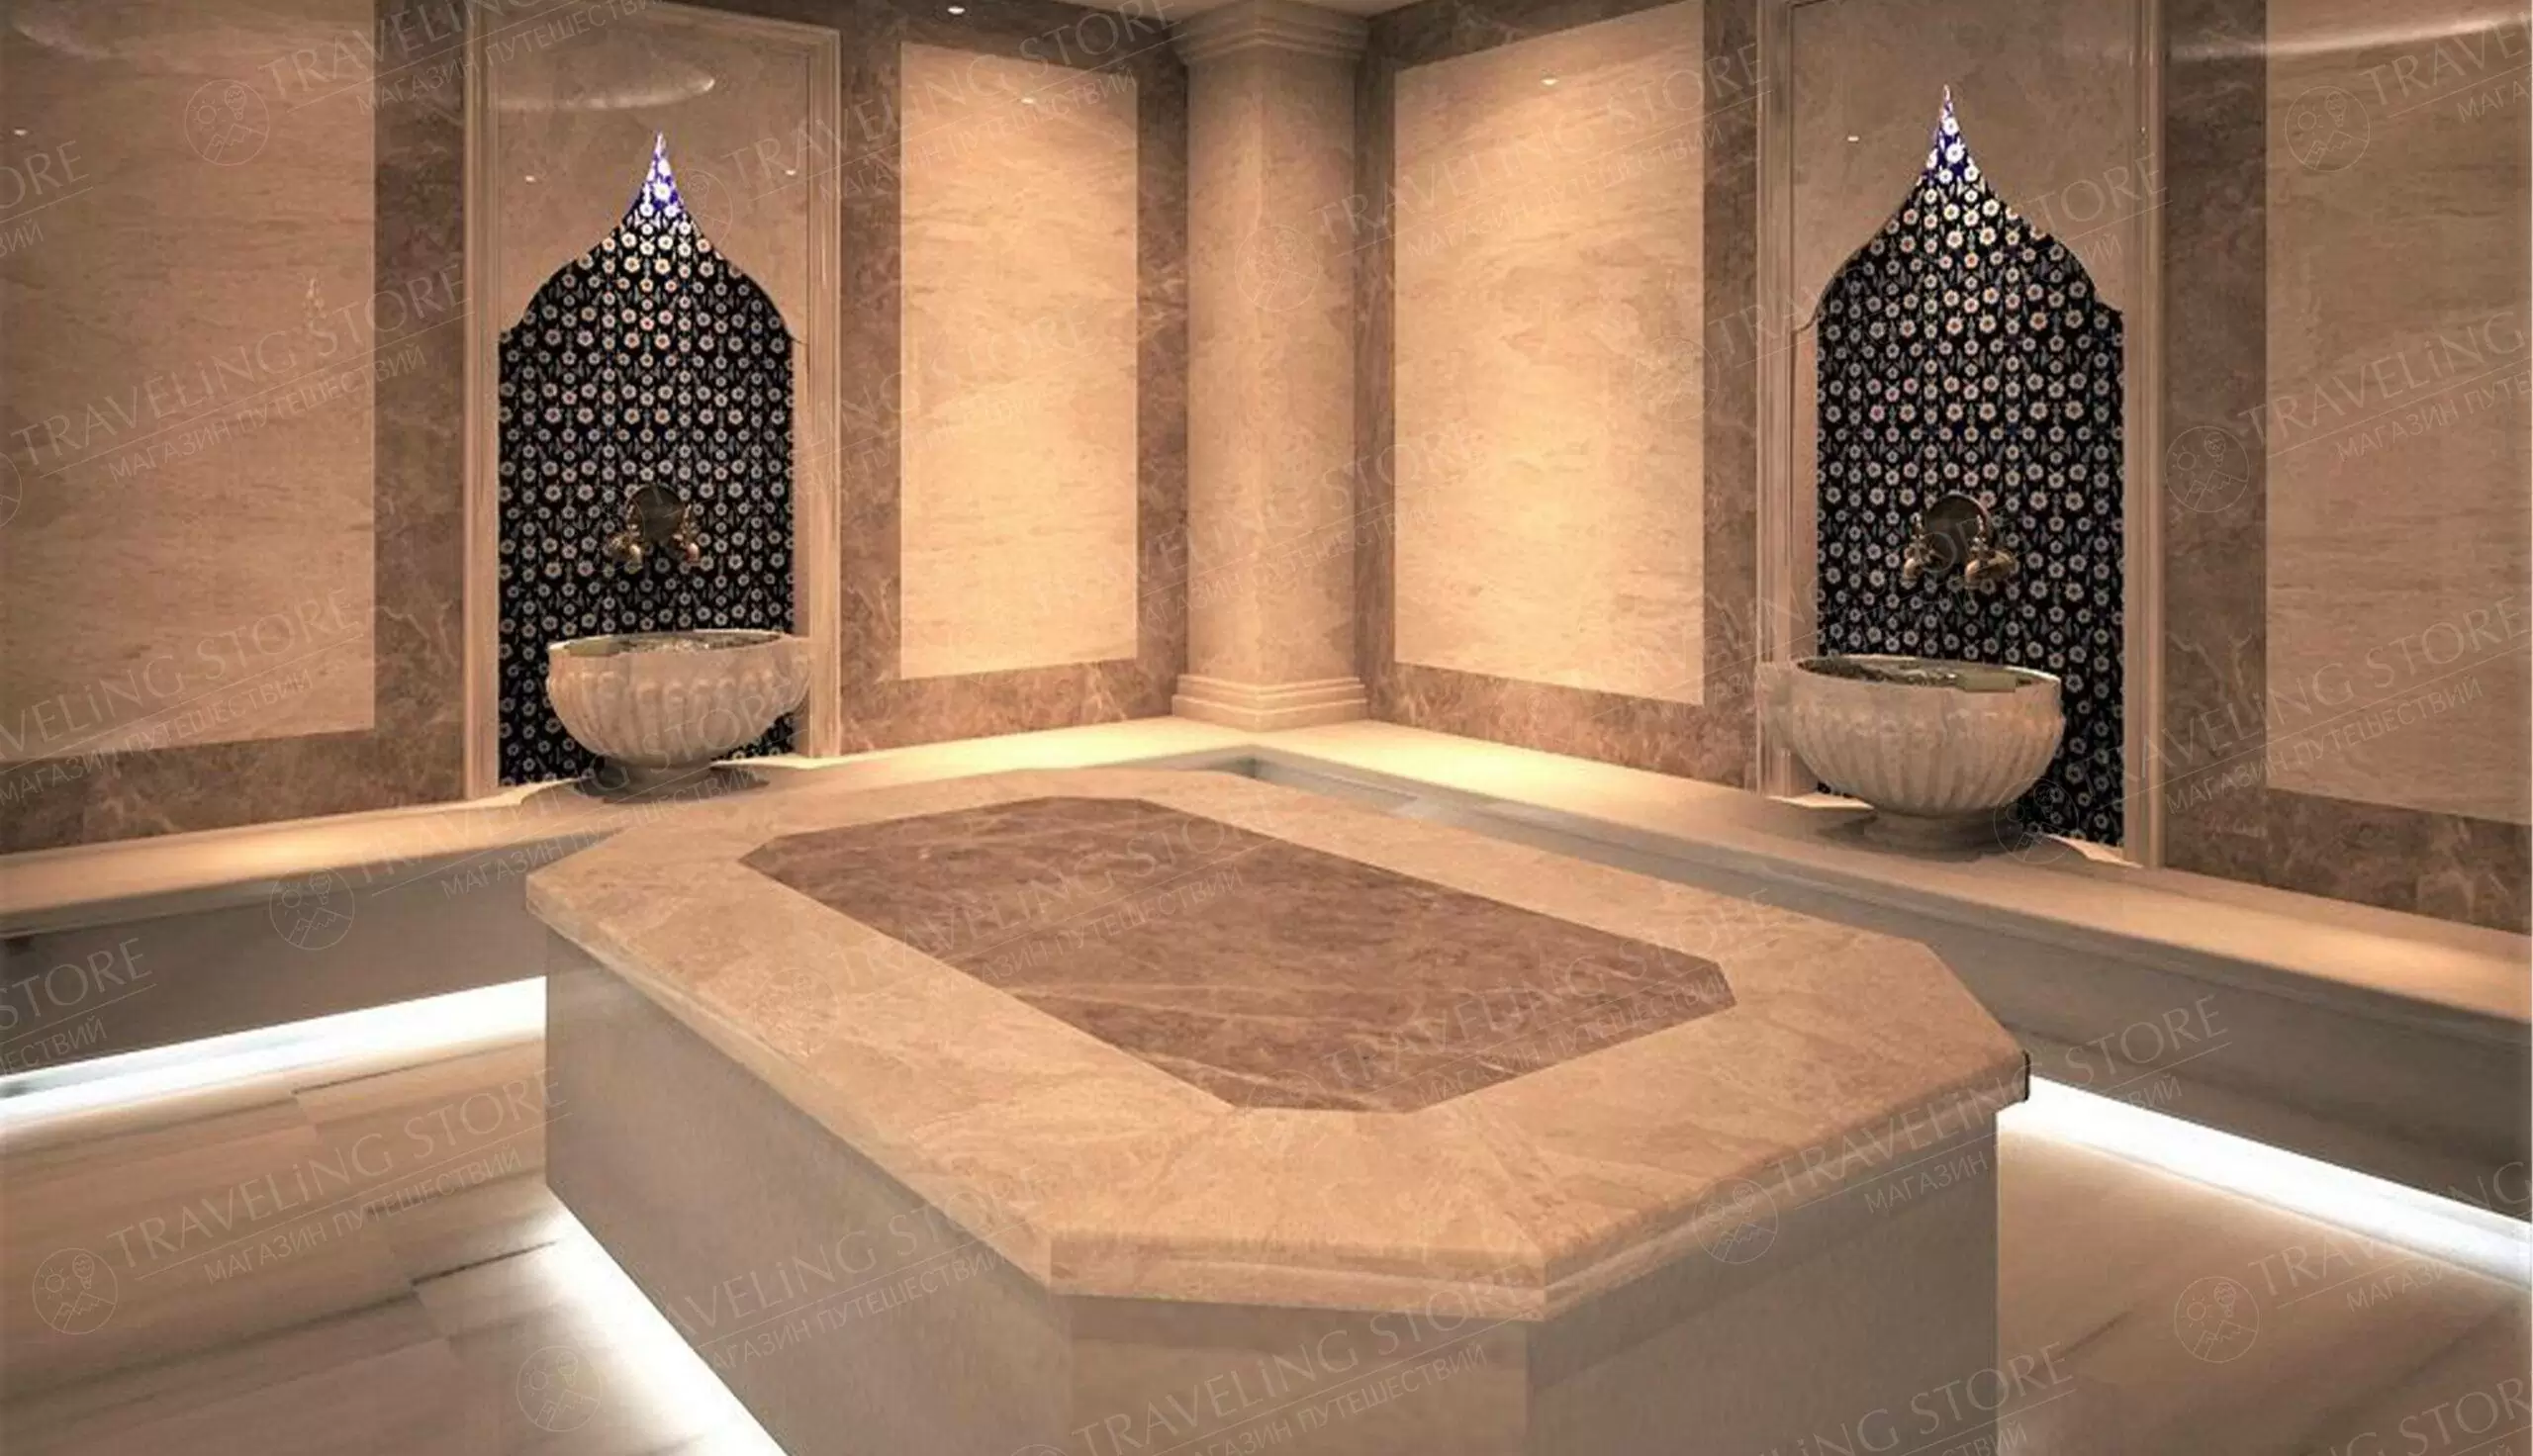 Turkish Bath “Hammam” in Belek